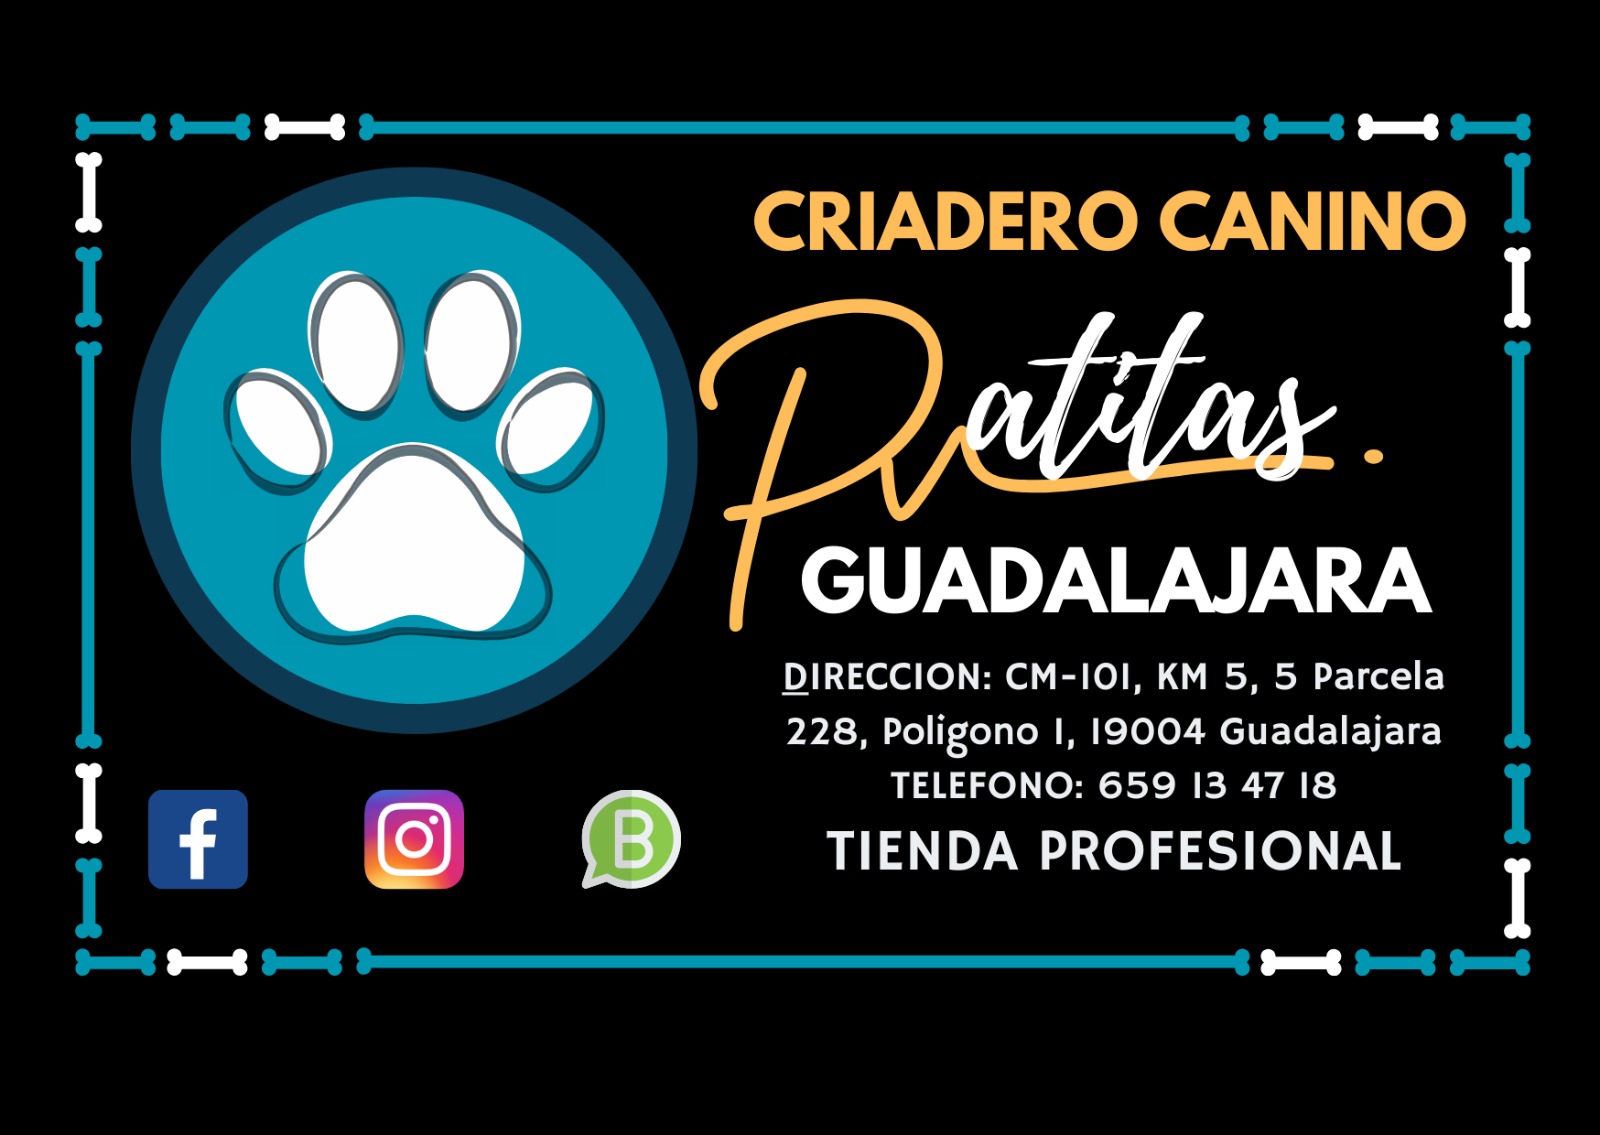 Images Criadero Canino Patitas Guadalajara